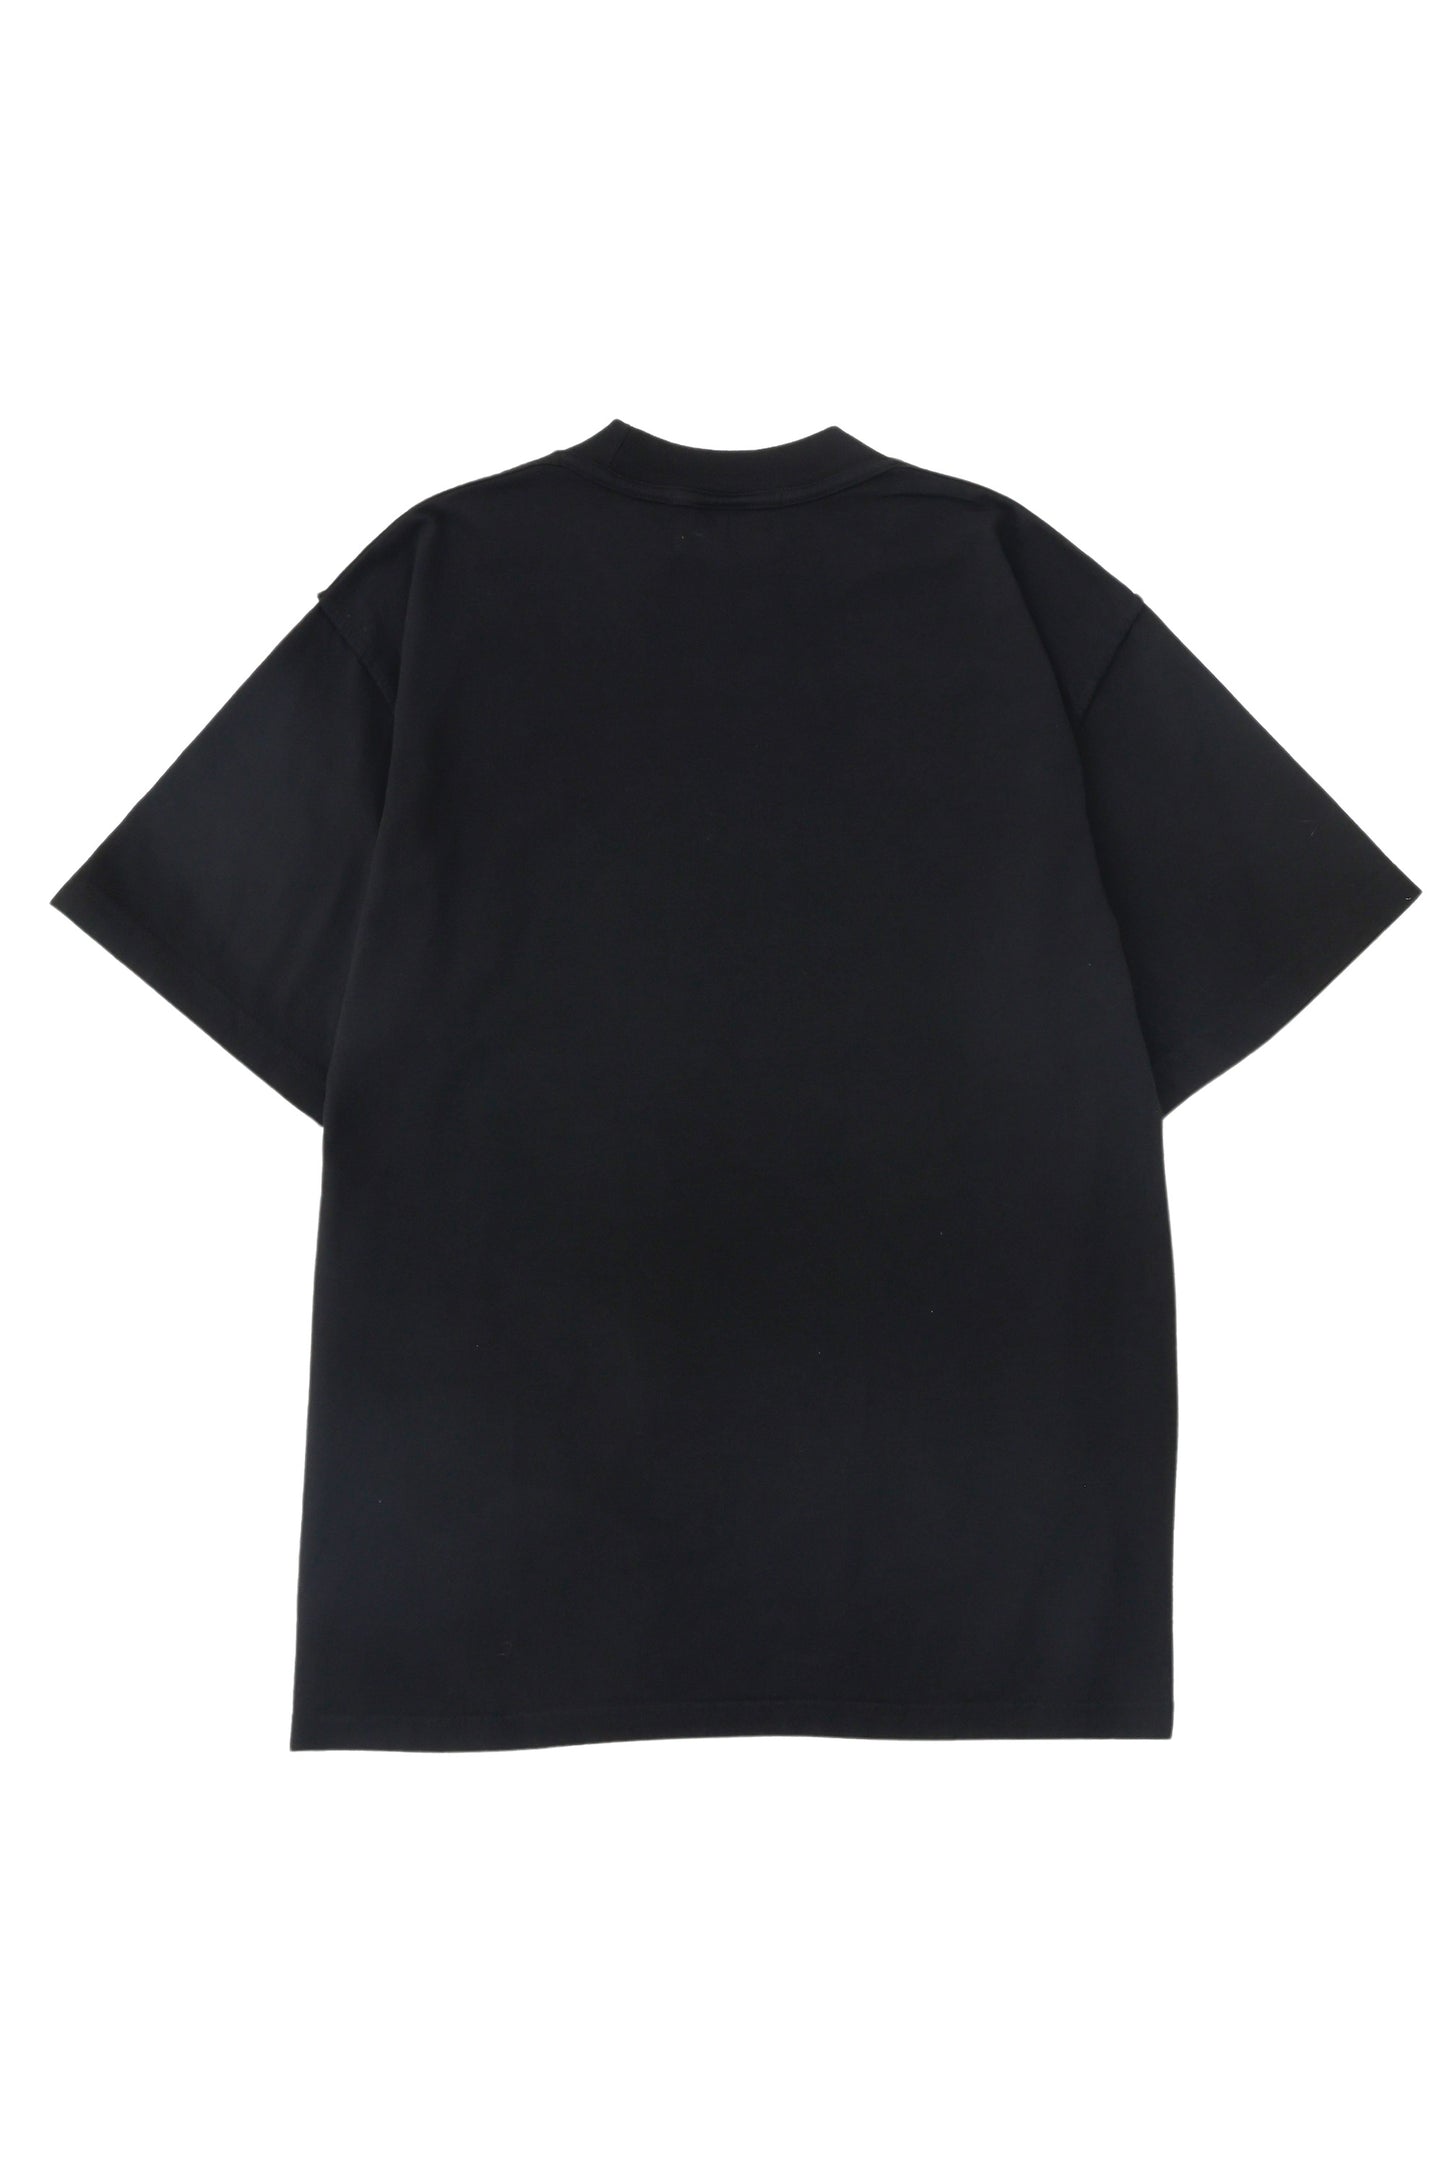 "ANCIENT LOGO" S/S T-shirt［BLACK］